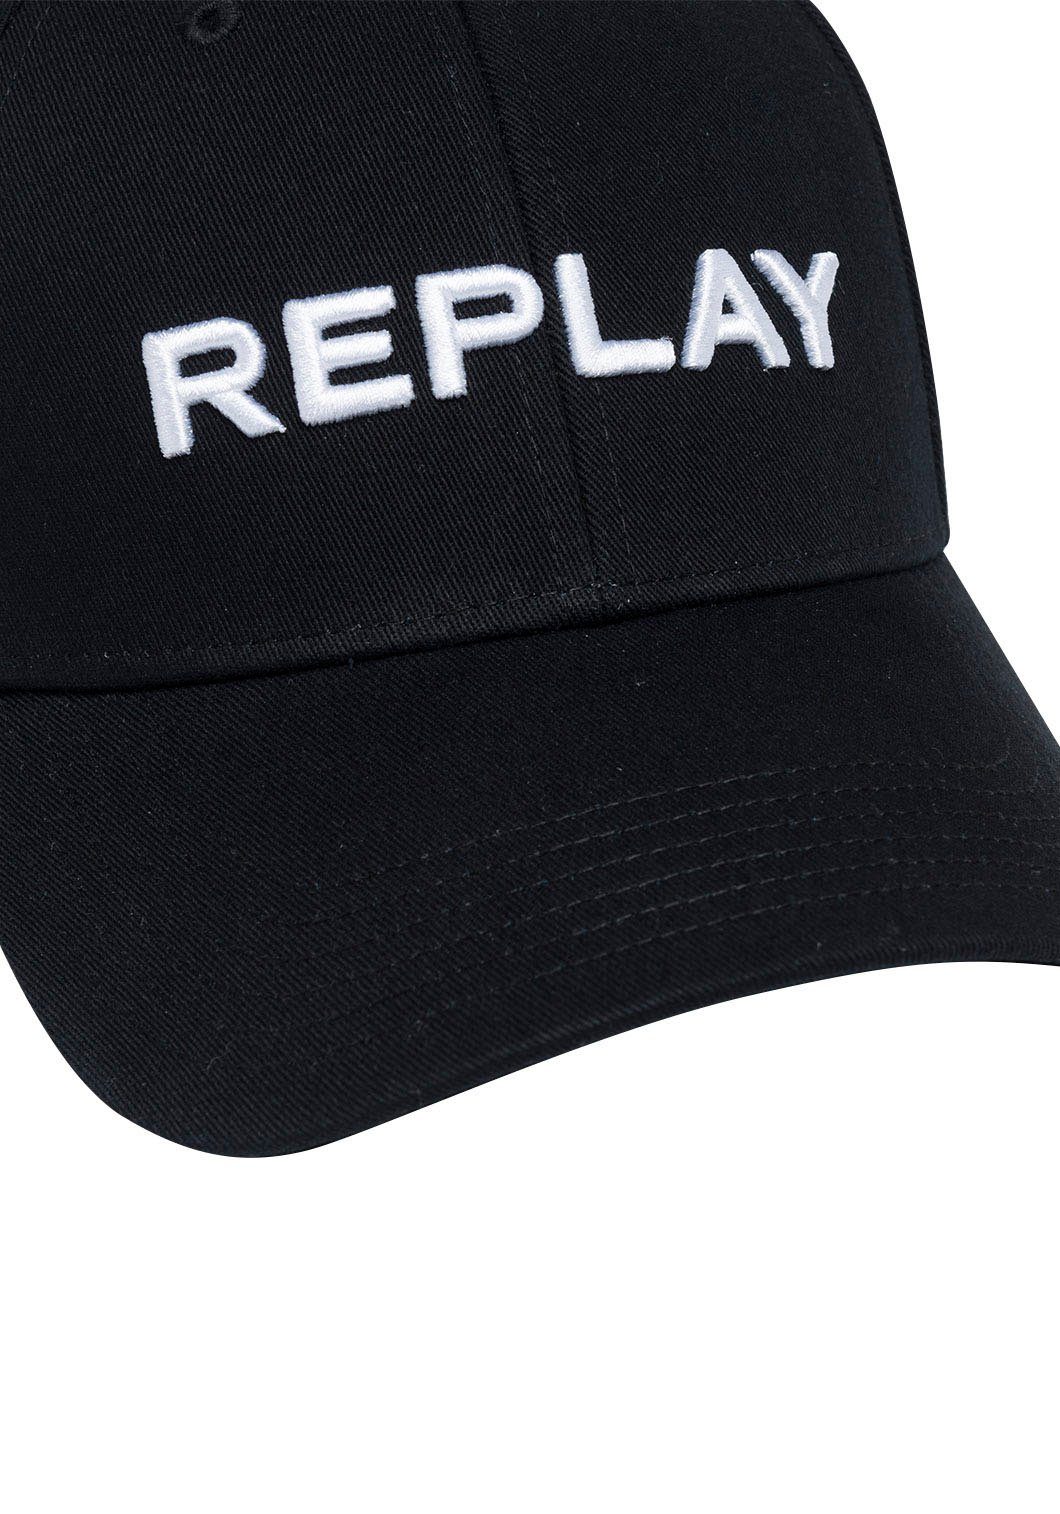 NATURALE Replay black mit Cap Baseball Logo-Stickerei COMPONENTE